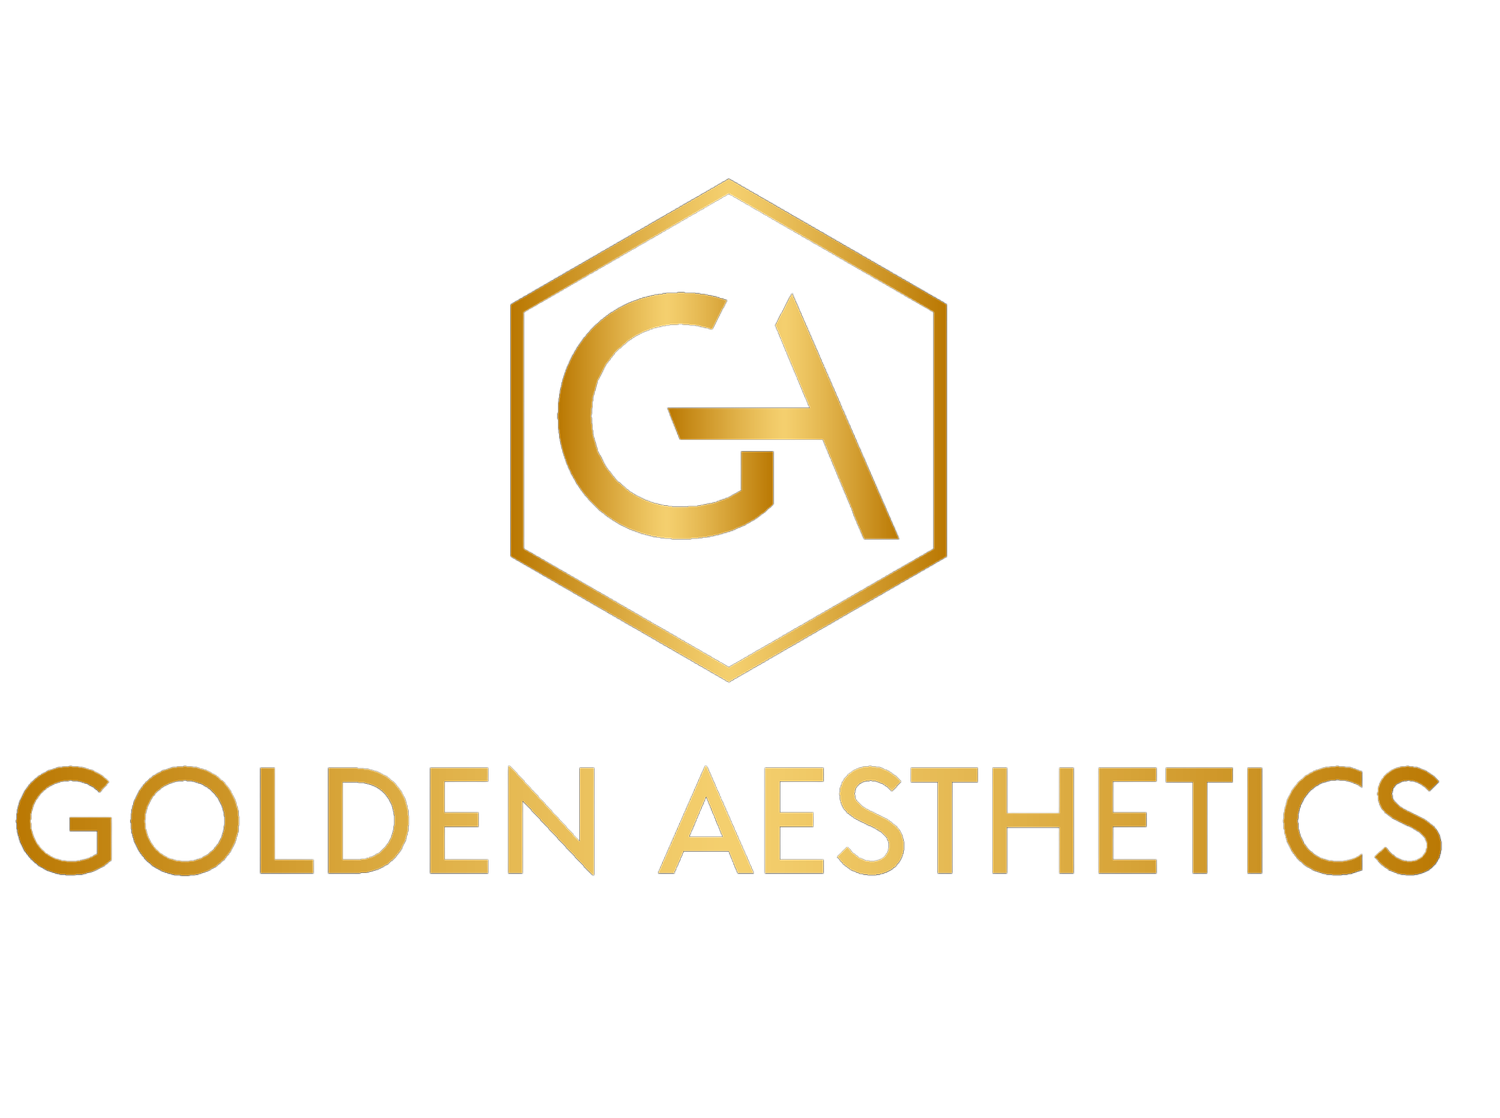 Golden Aesthetics